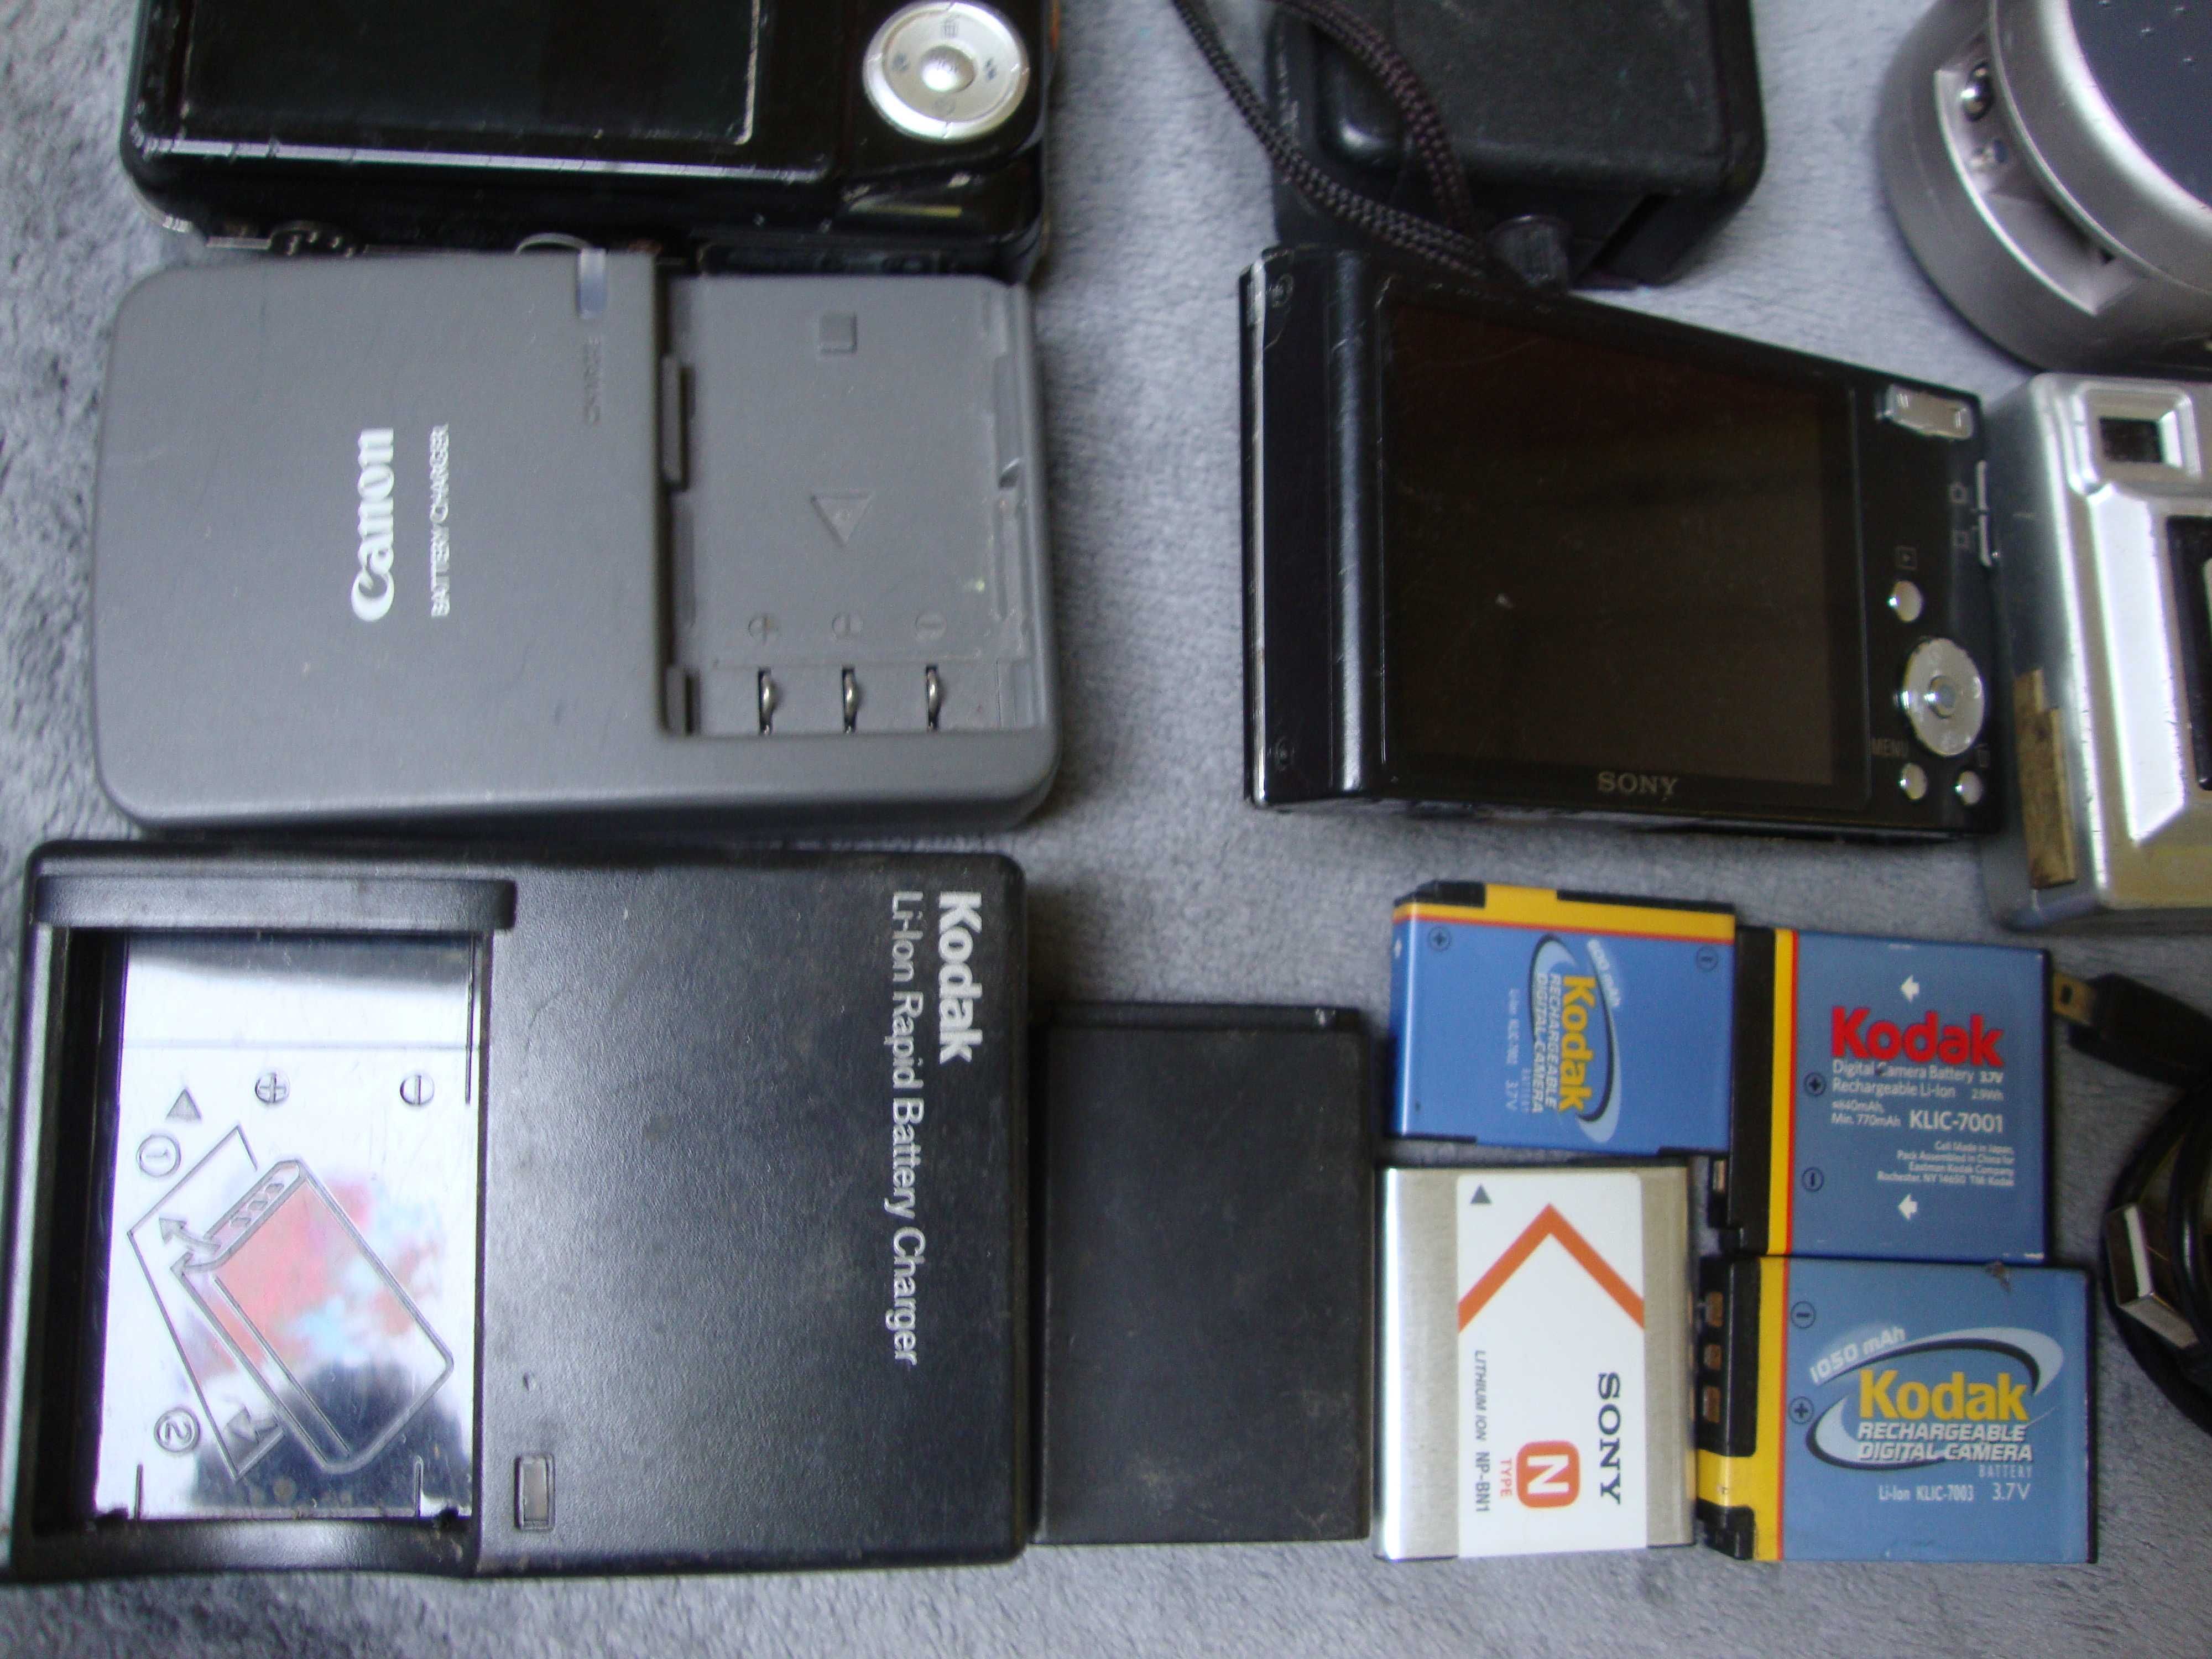 Aparate foto digitale defecte de piese sau reparat (Sony, Kodak, Fuji)